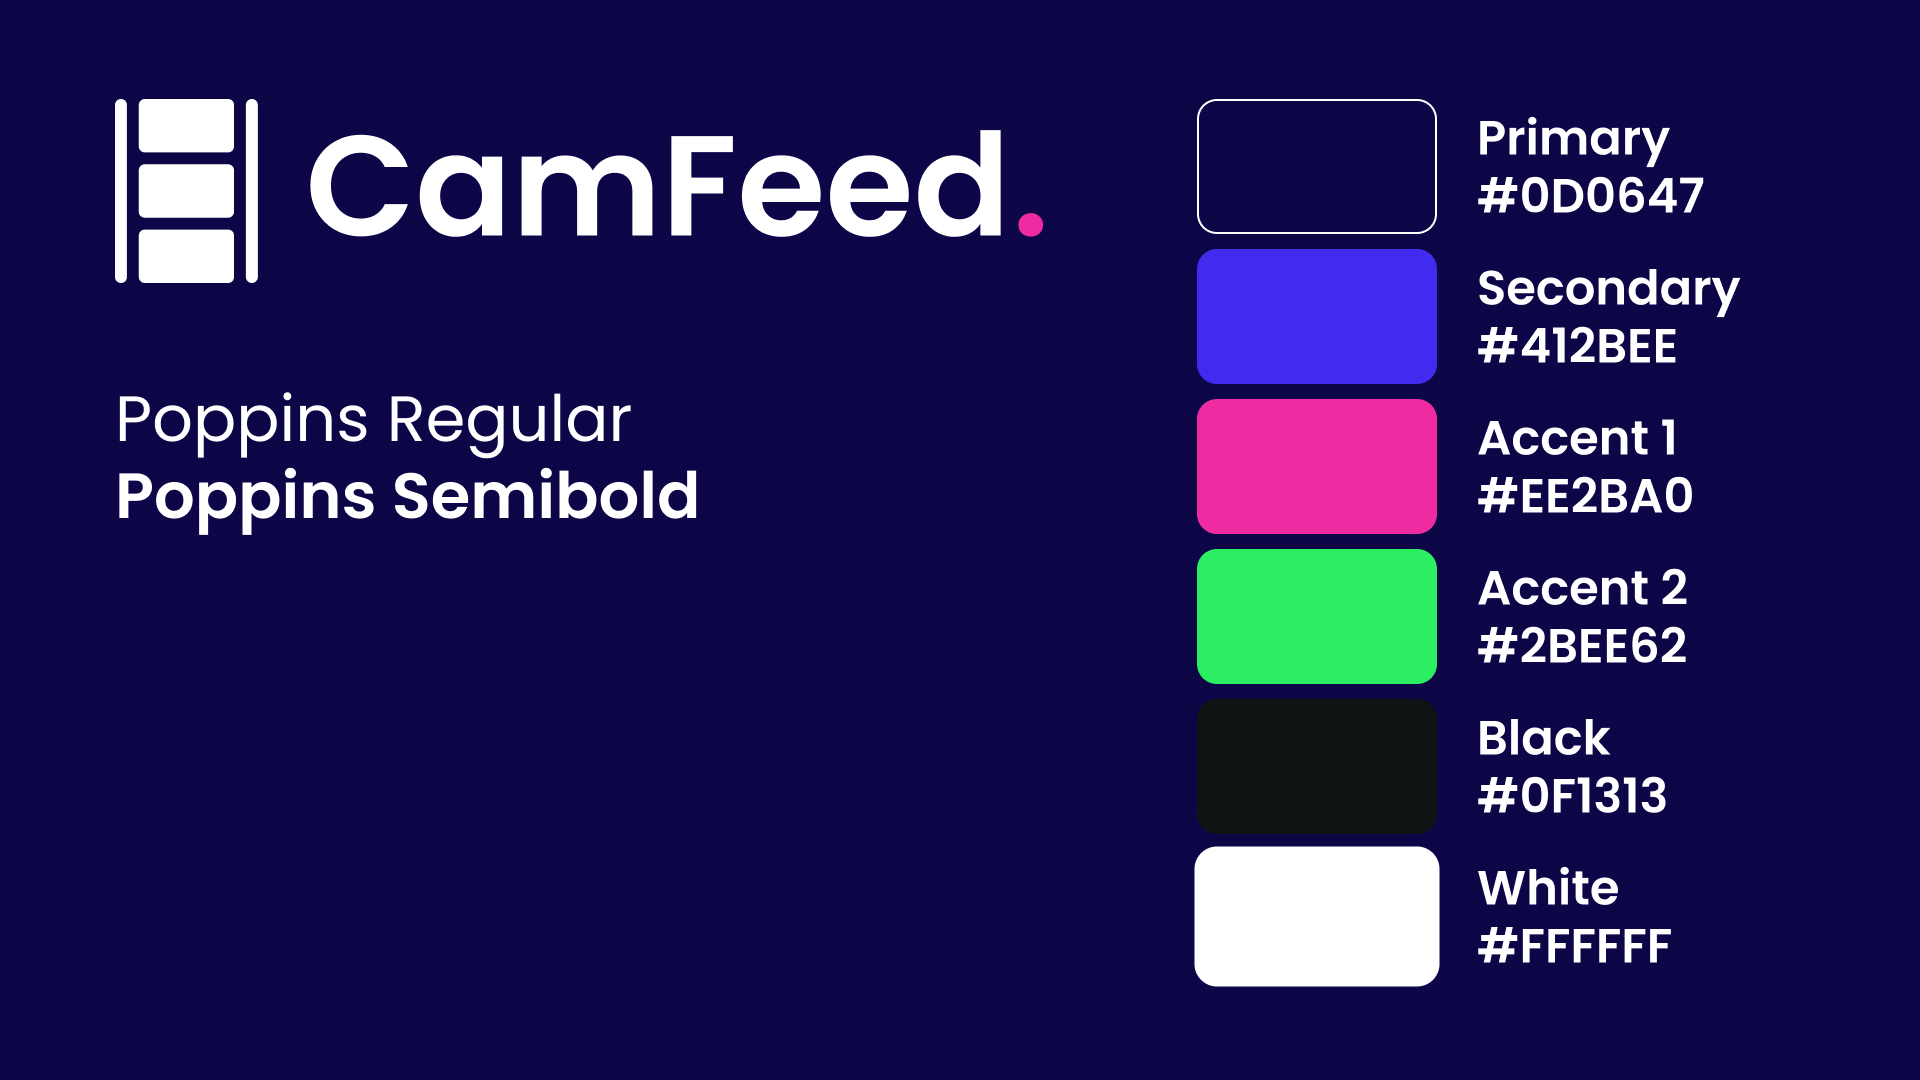 The CamFeed Brand